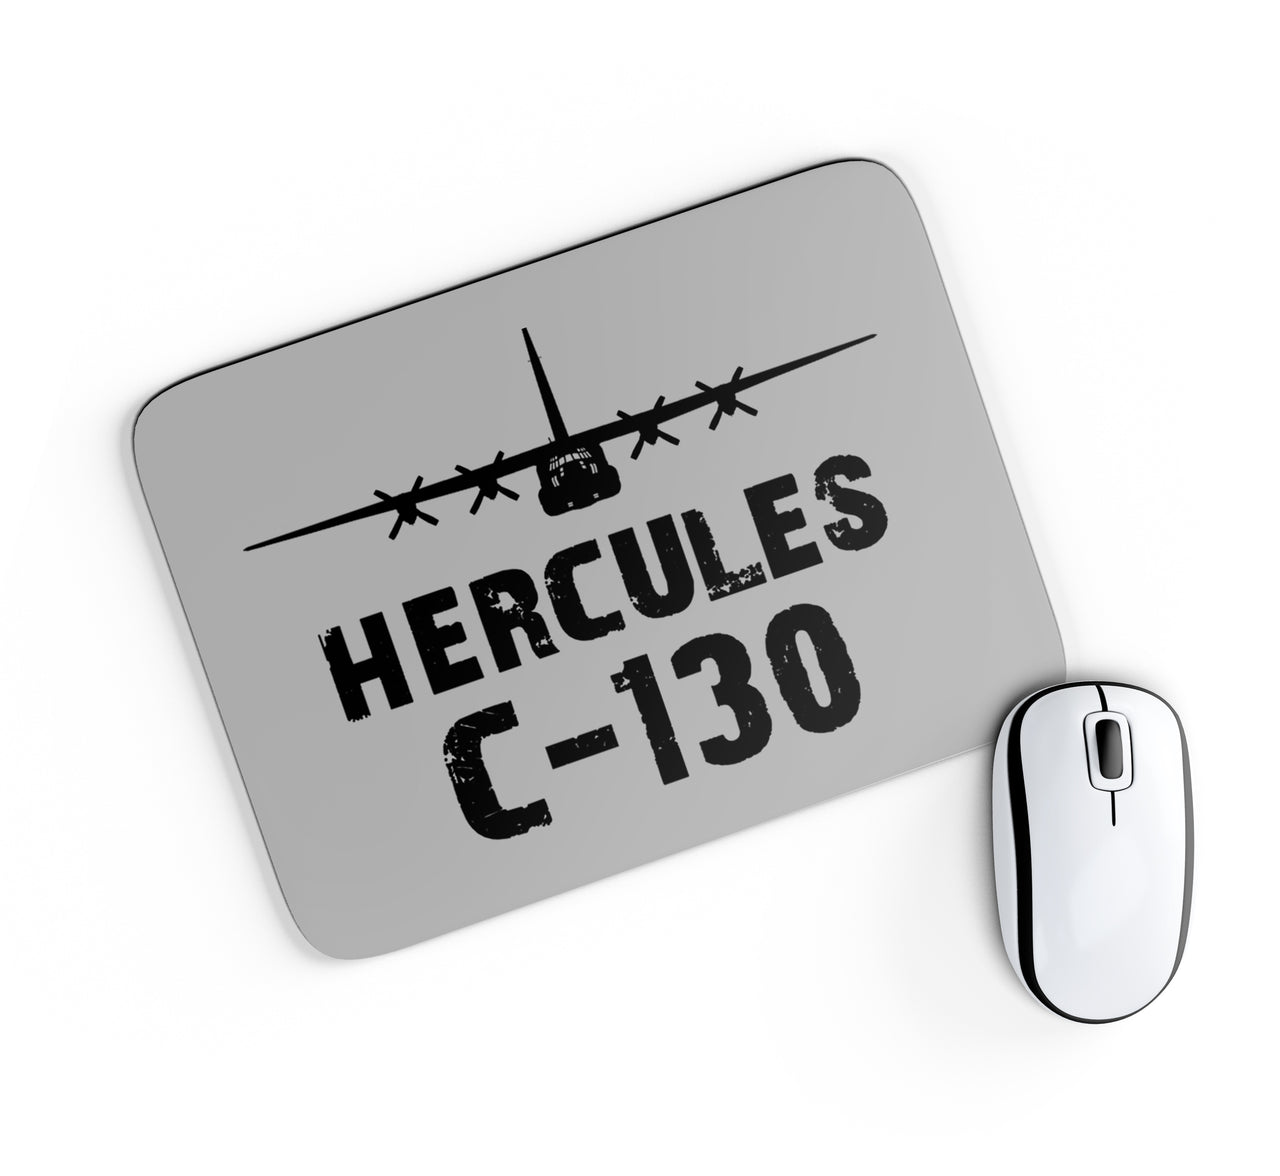 Hercules C-130 & Plane Designed Mouse Pads